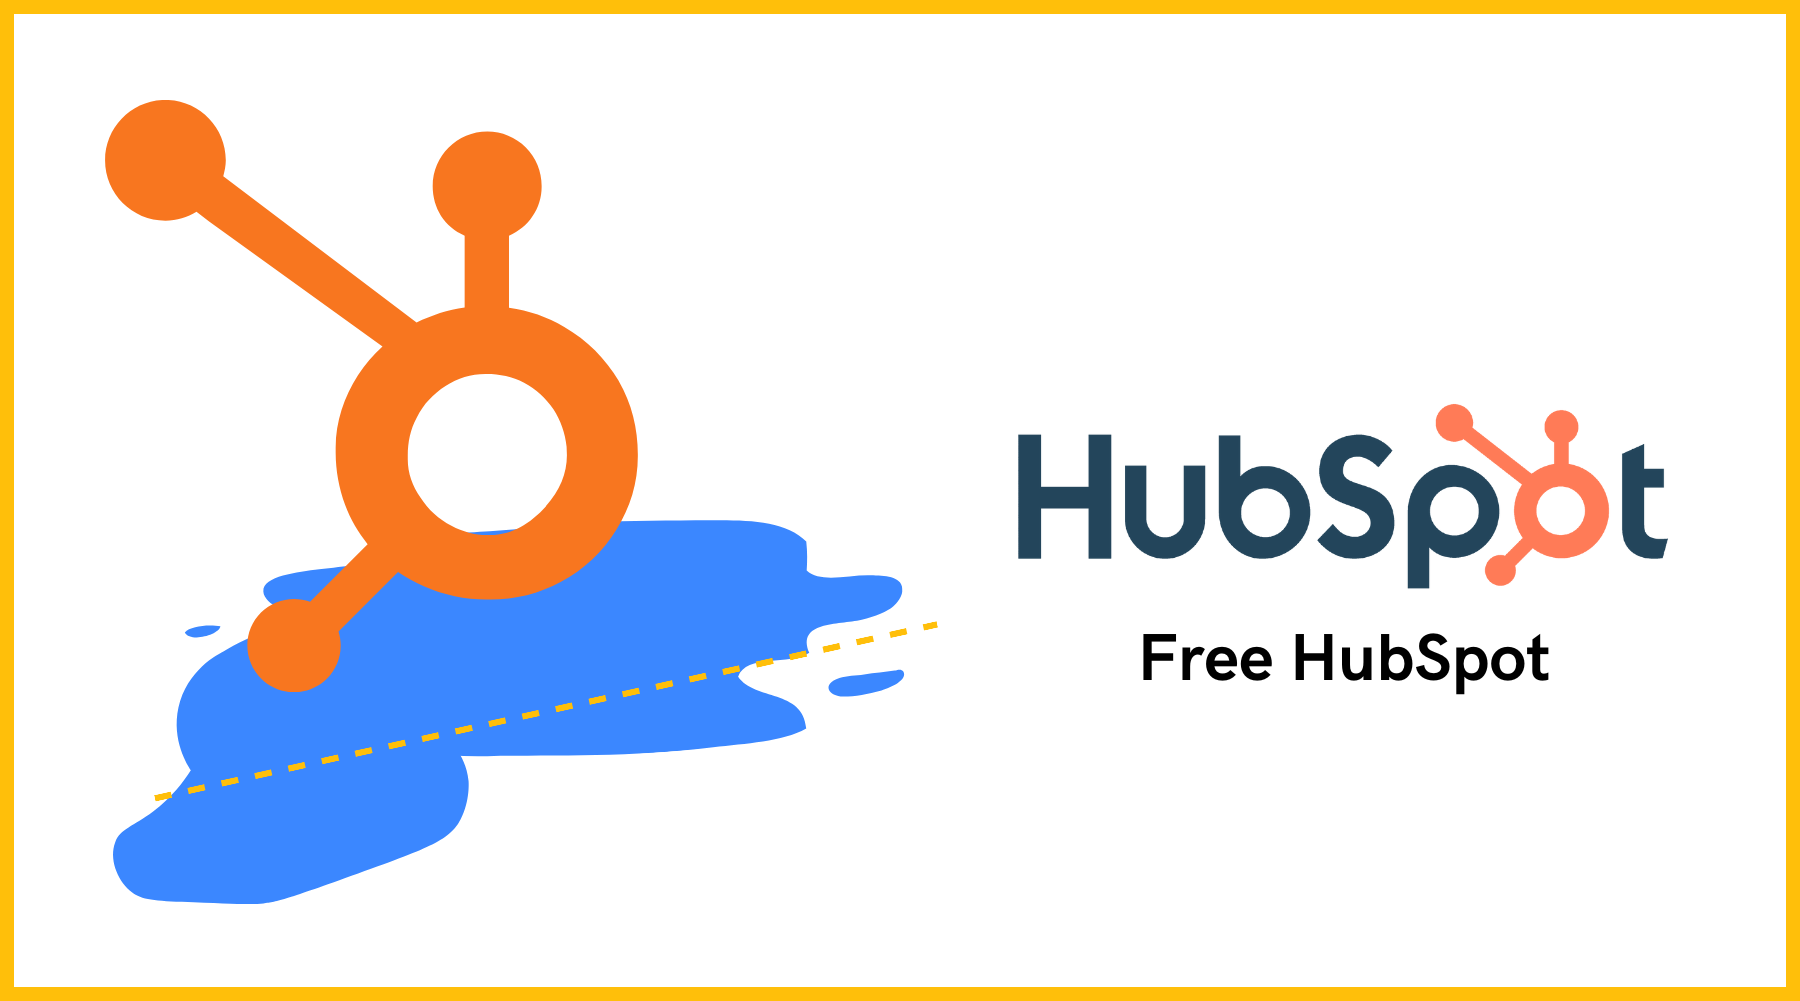 Benefits of Using Free HubSpot